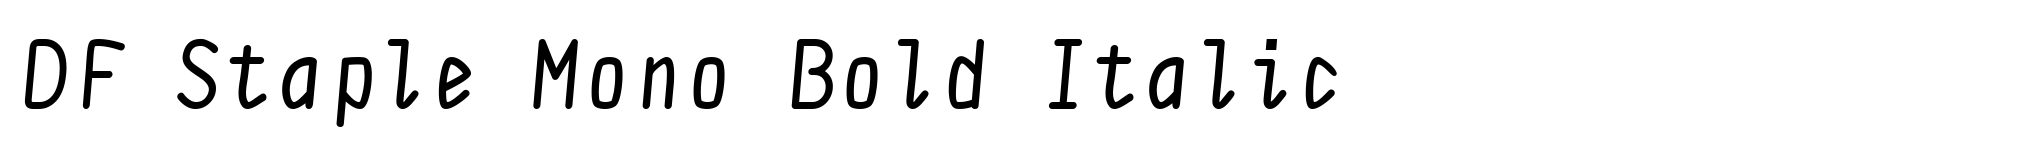 DF Staple Mono Bold Italic image